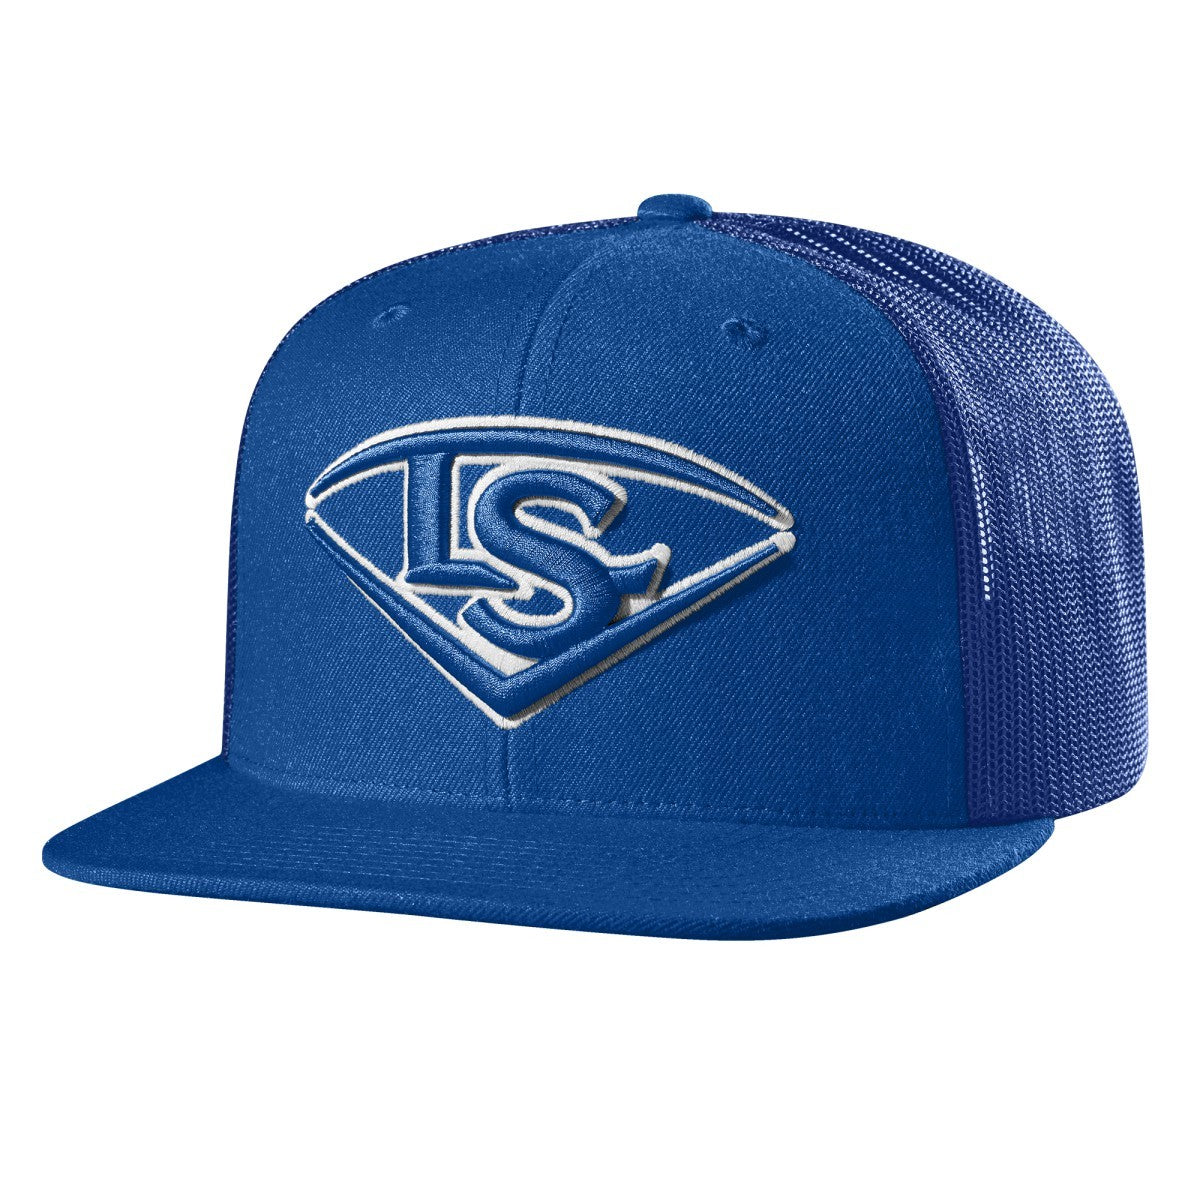 Best Selling Louisville Slugger Cap Baseball Cap baseball caps